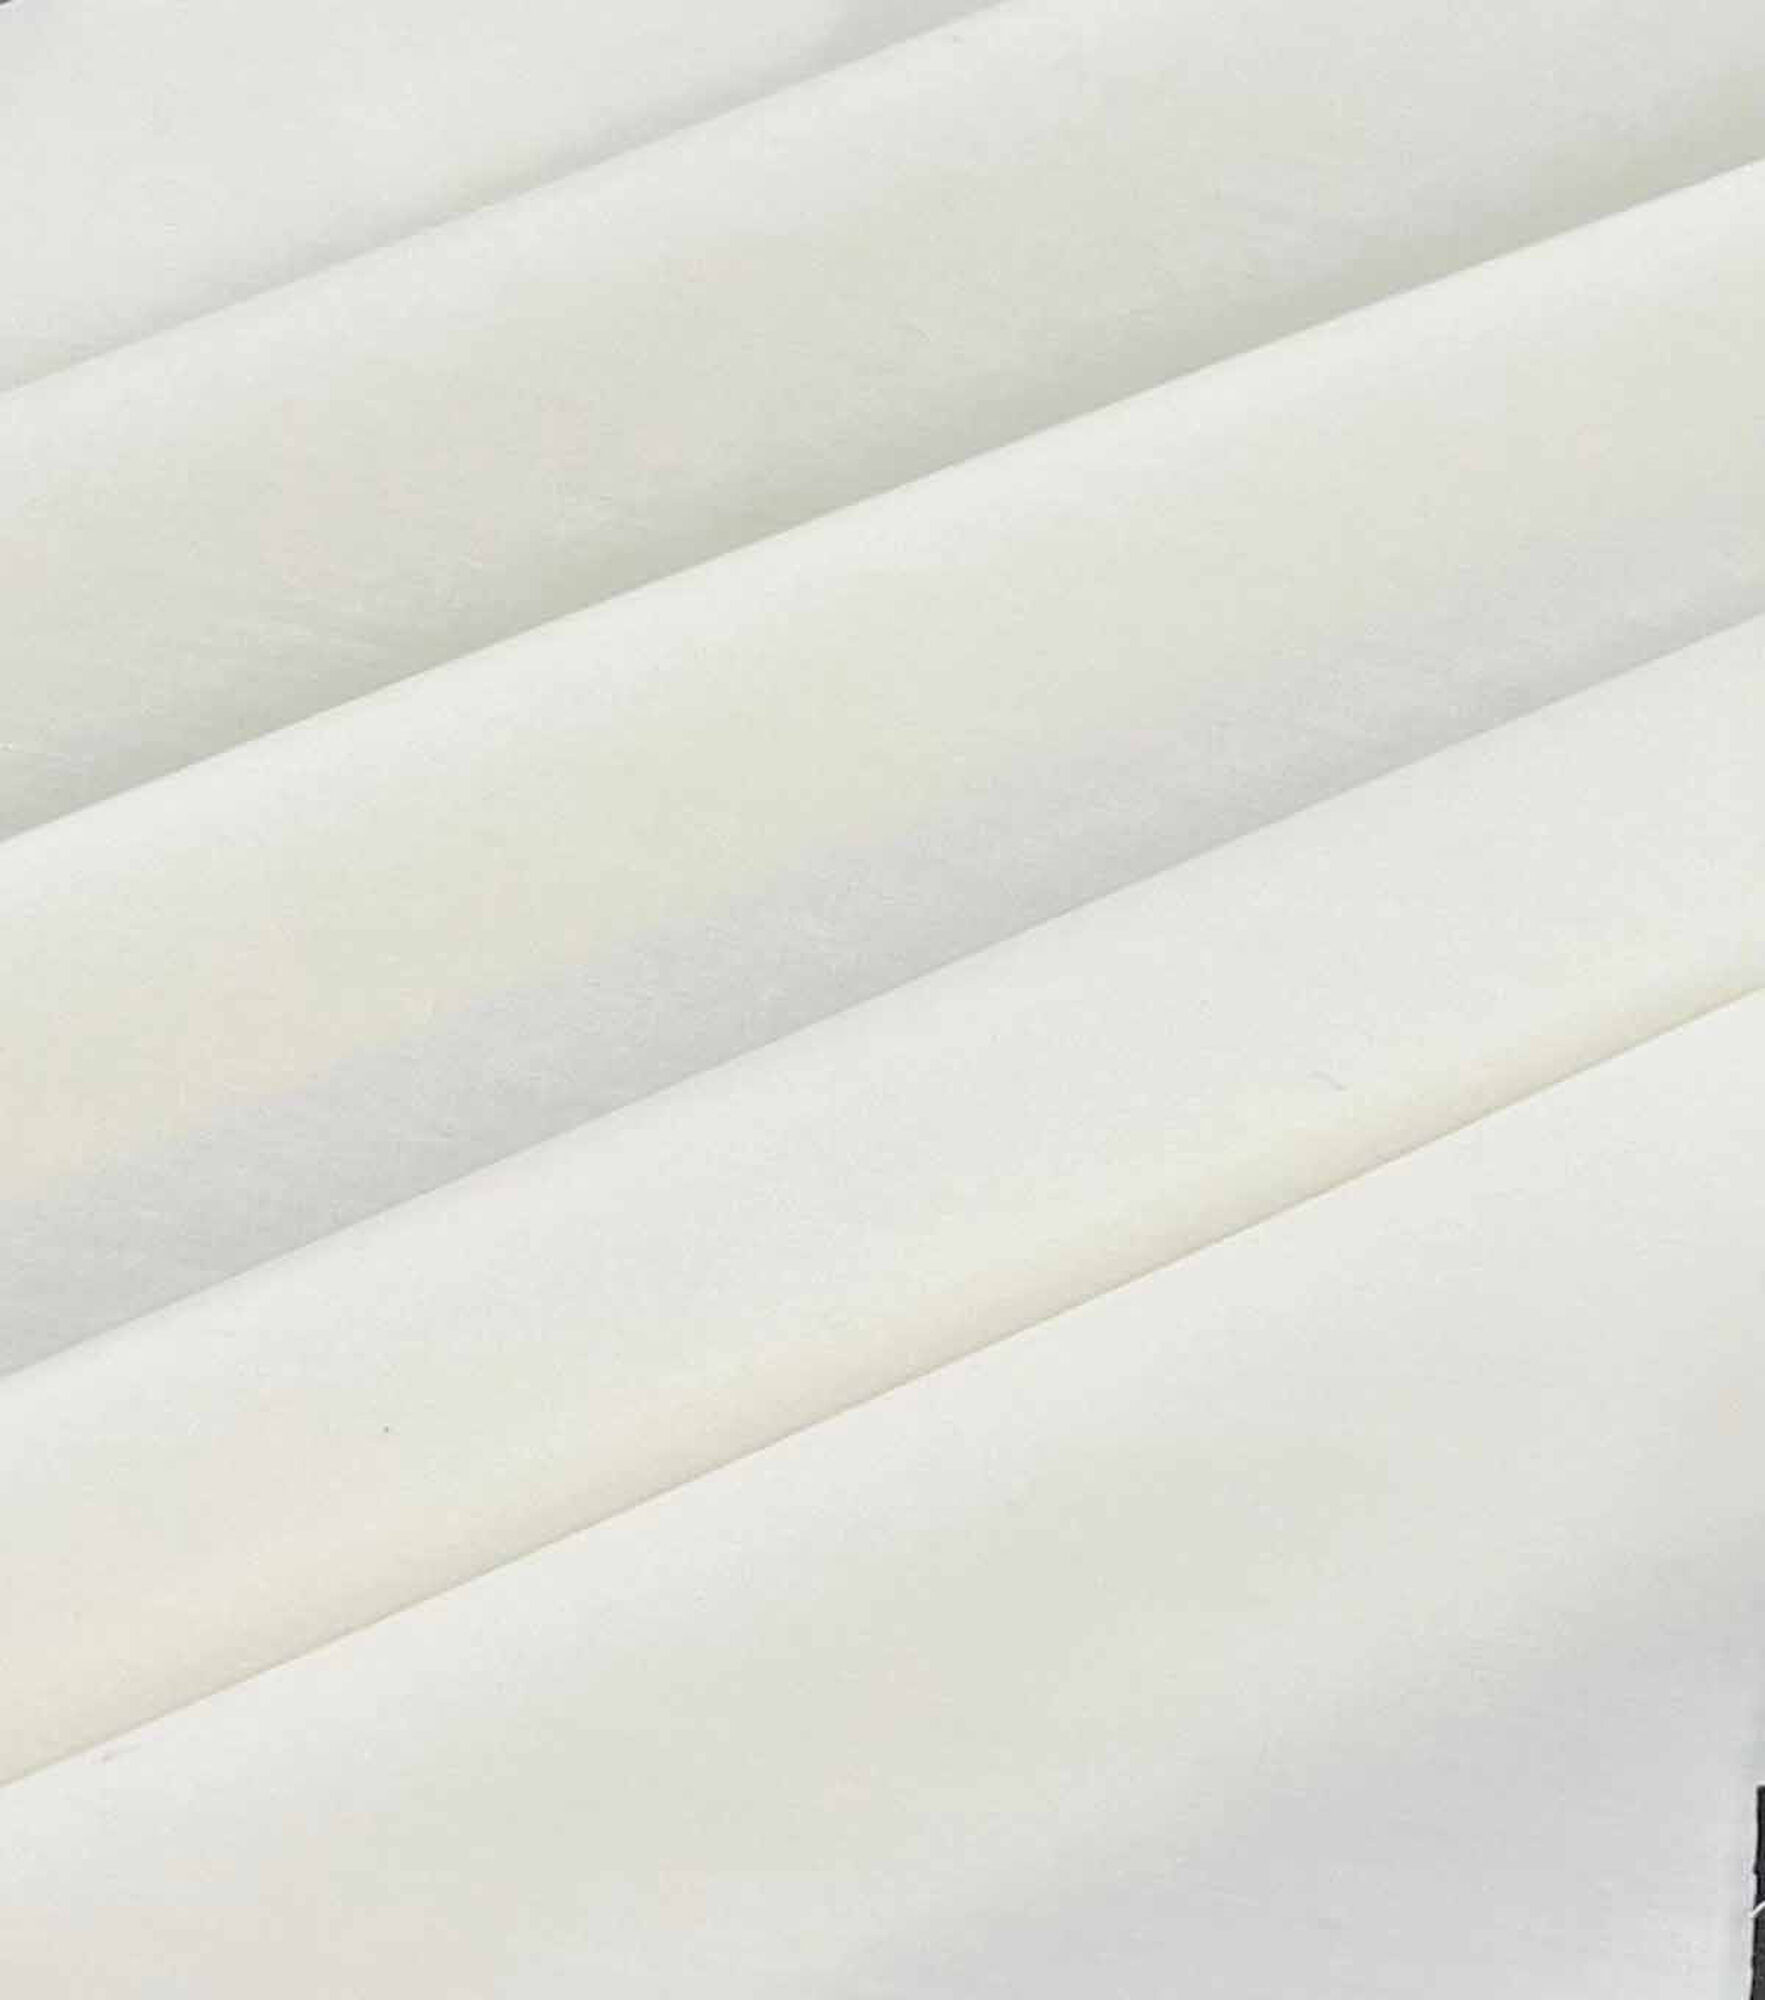  1 Yard 60 Wide Black Premium Cotton Blend Broadcloth Fabric